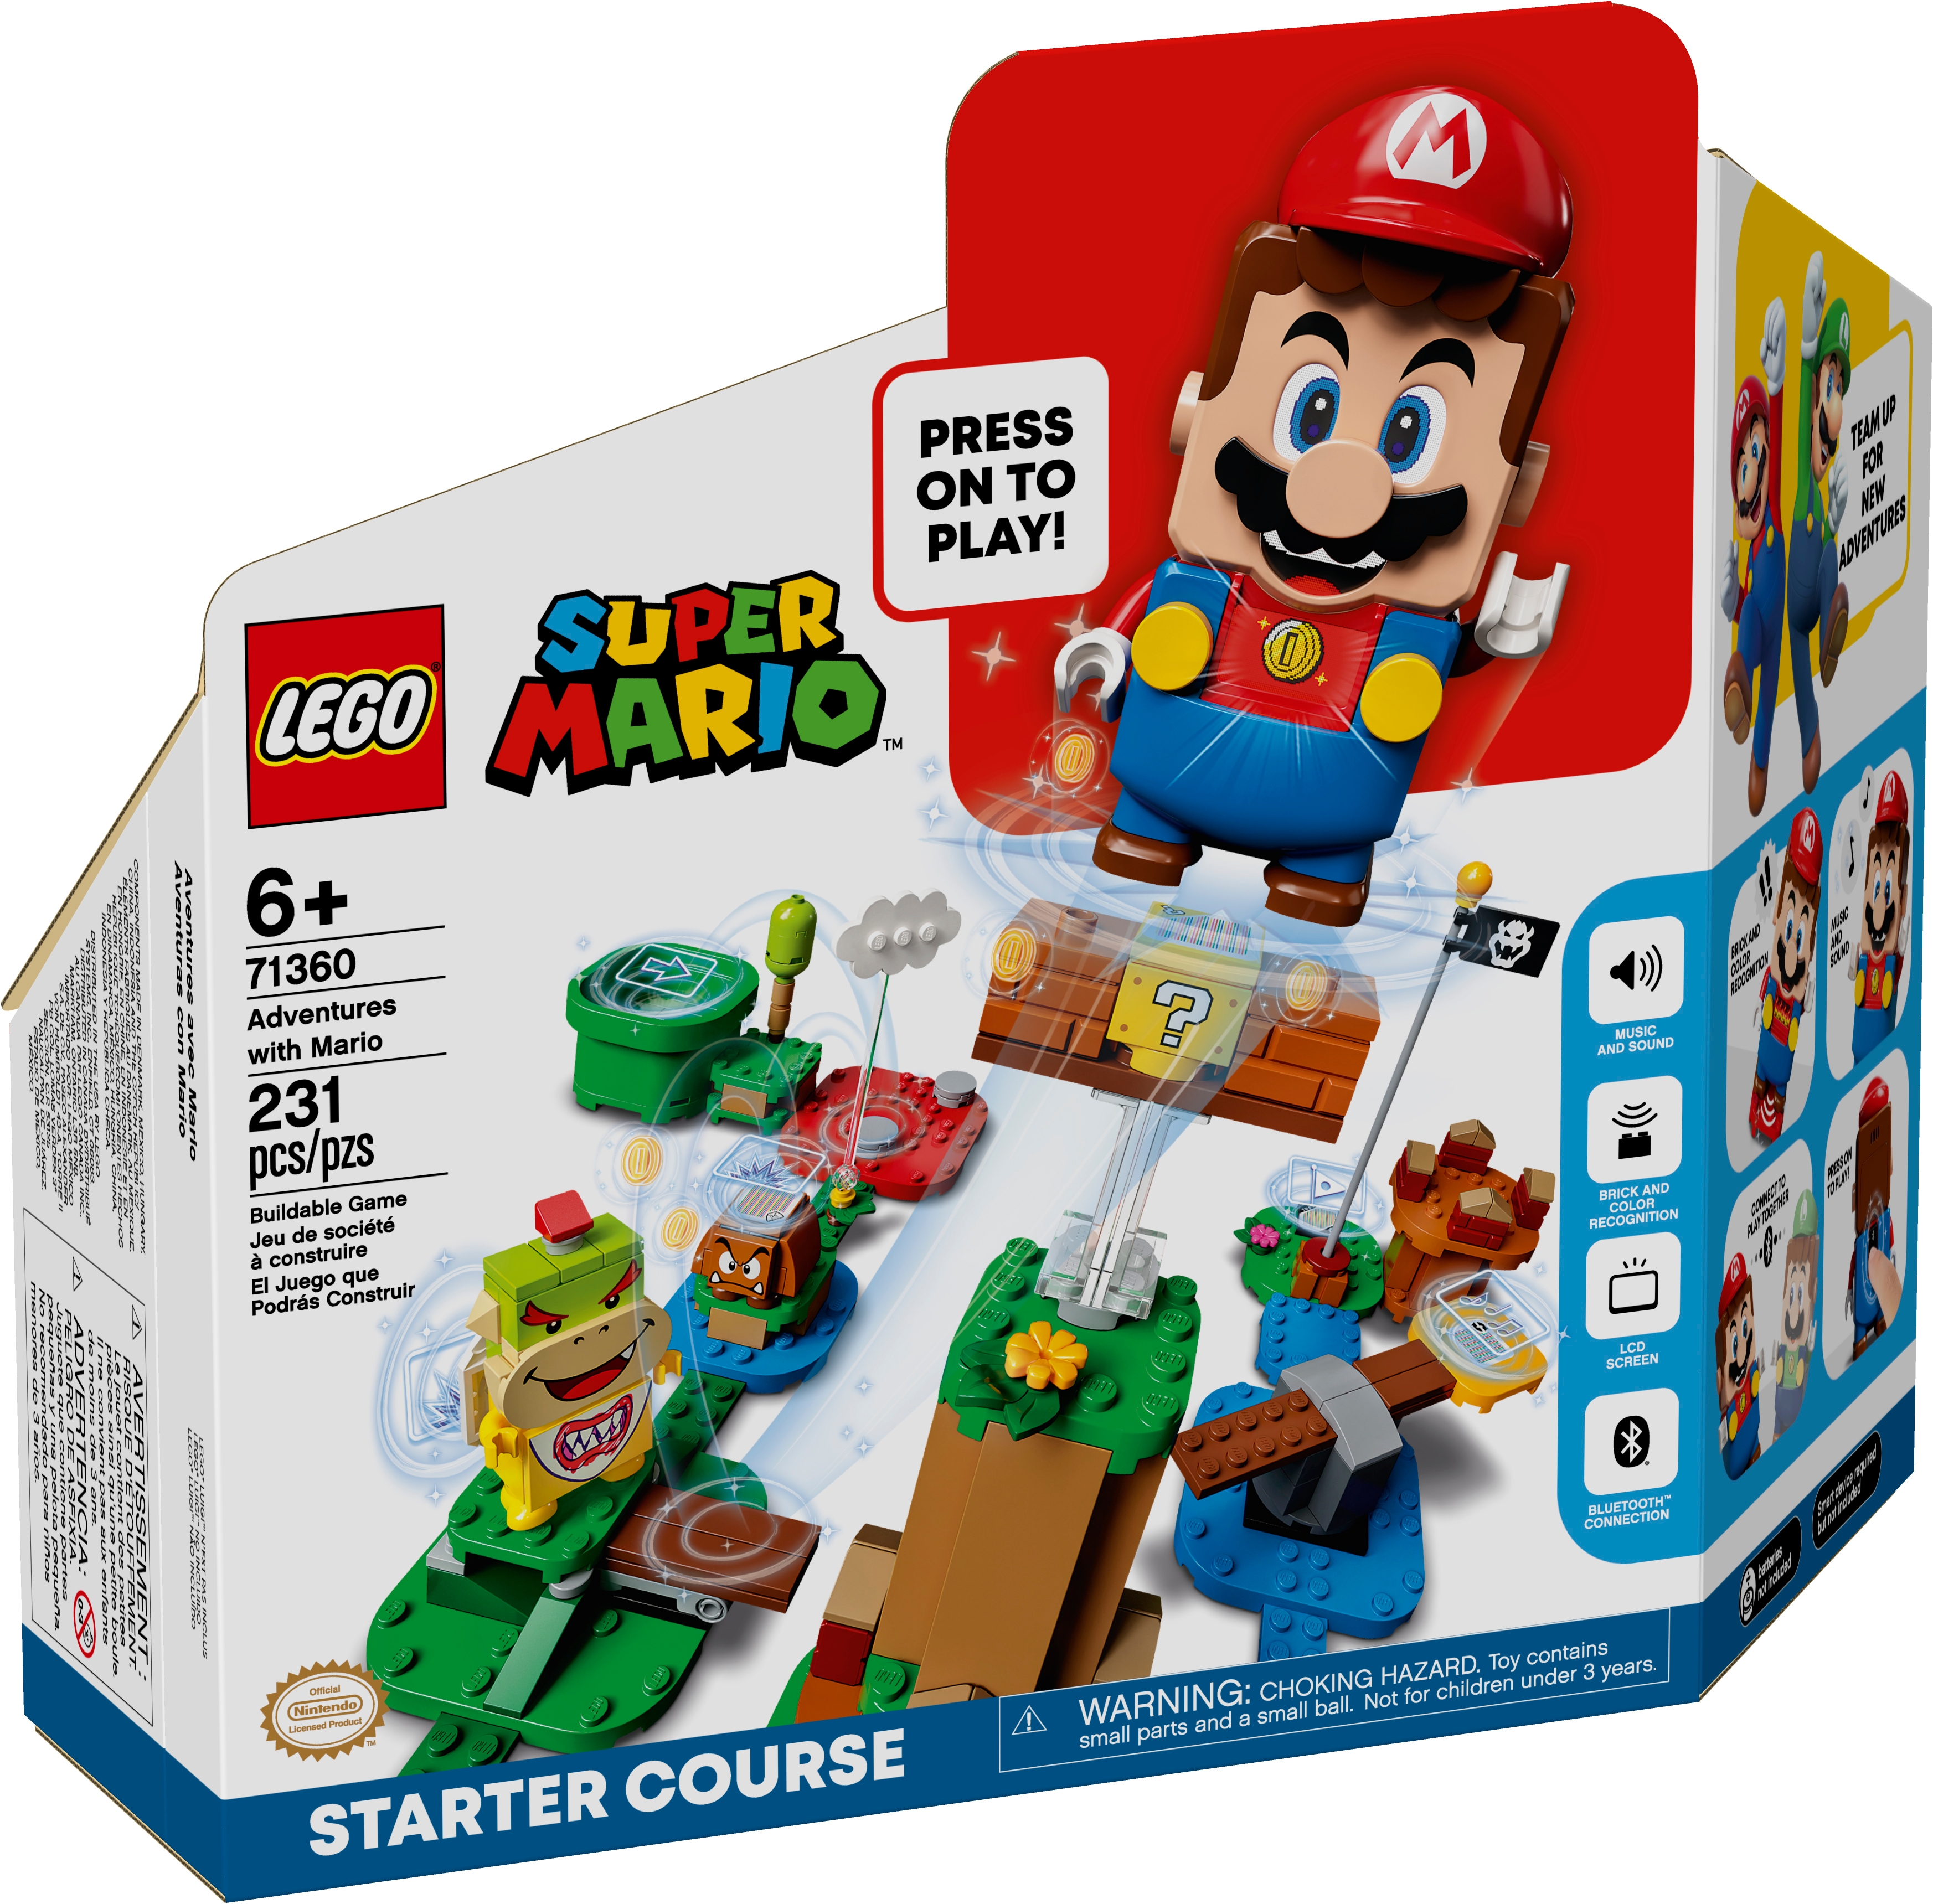 Pack Inicial: Aventuras con Mario 71360, LEGO® Super Mario™